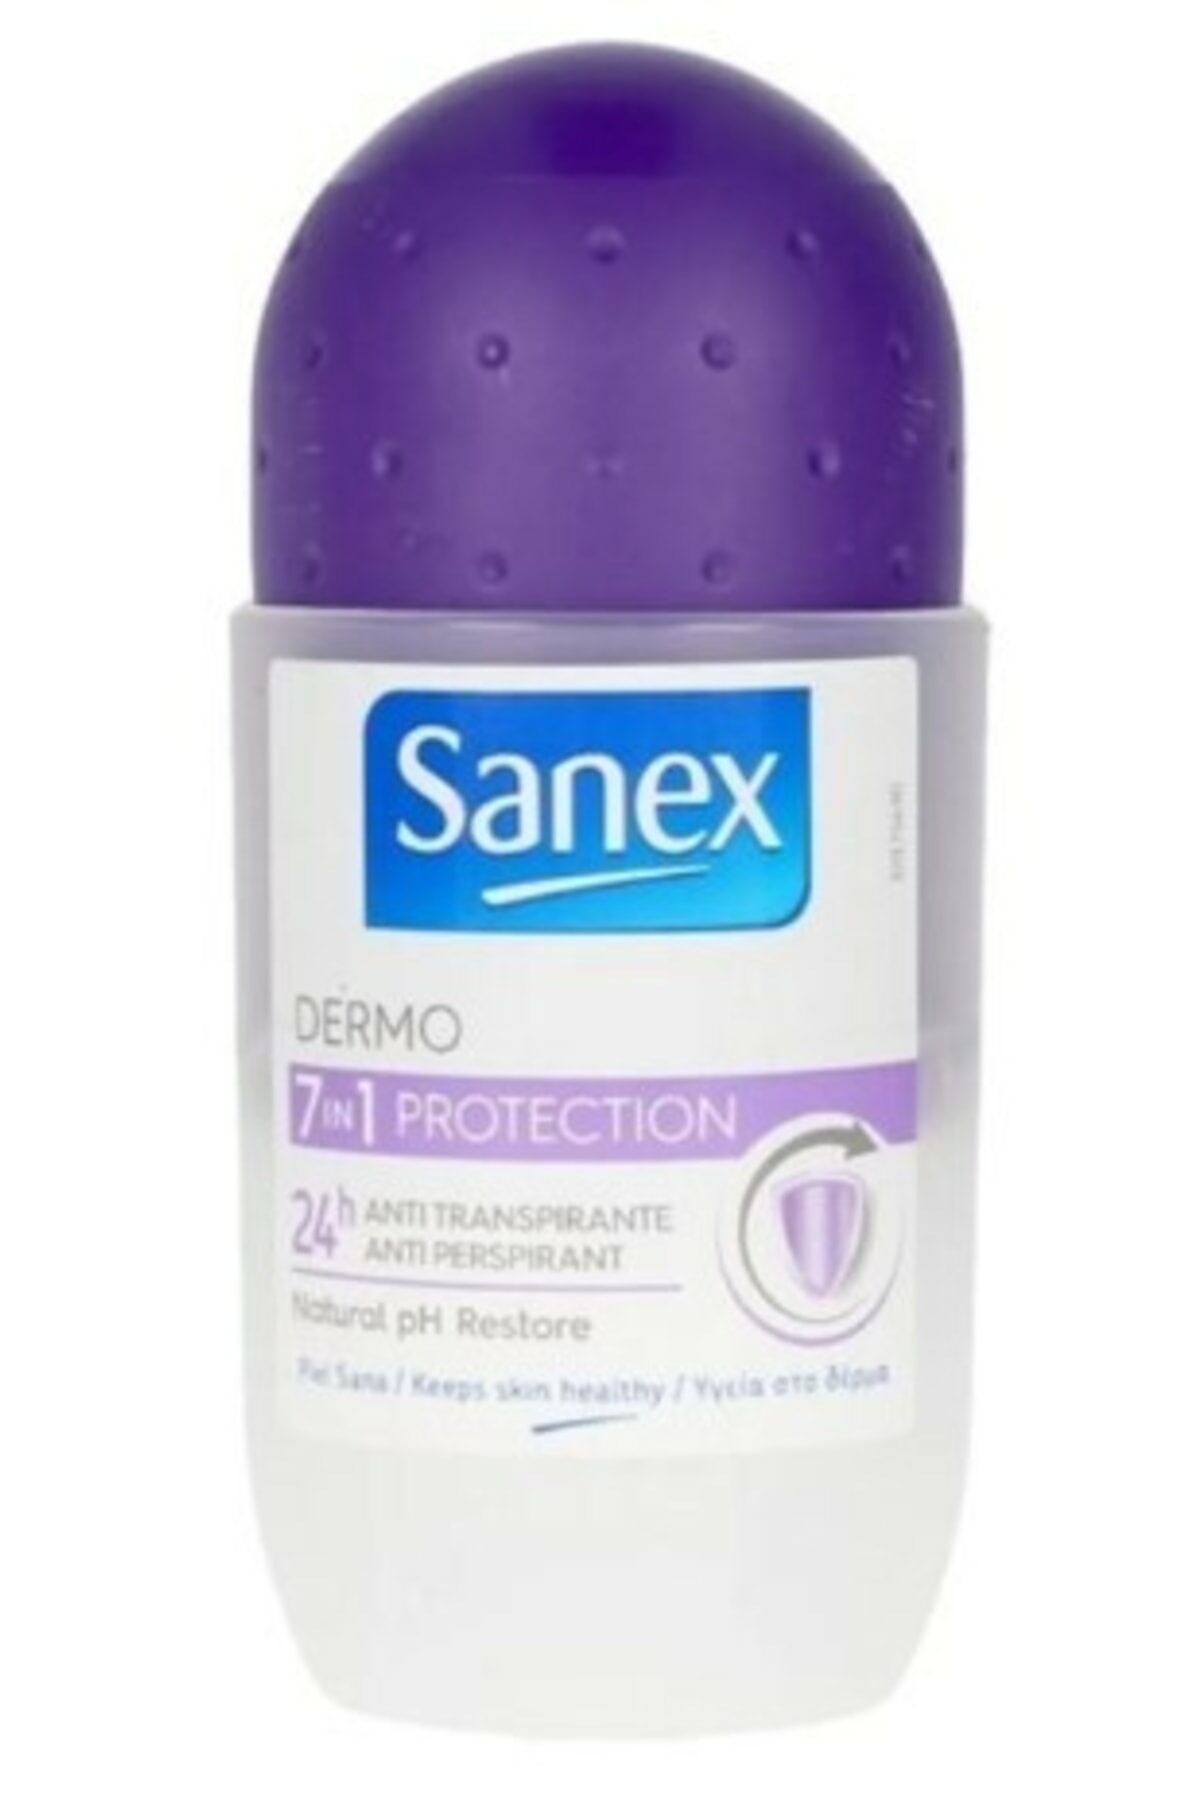 Sanex Dermo 7in1 Protectıon Roll-on 50ml